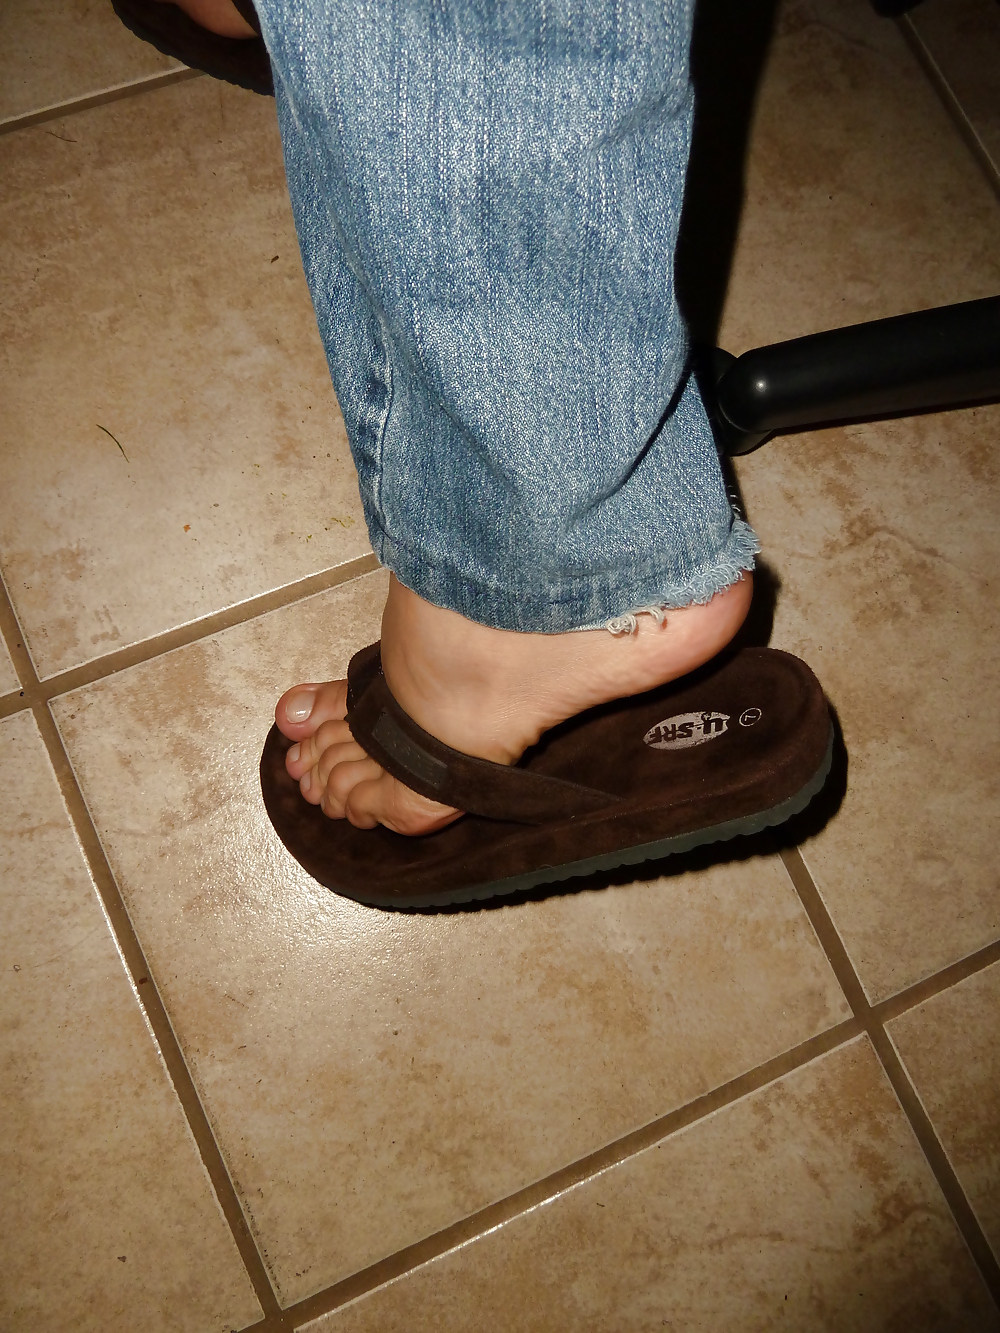 flip flop feet pict gal